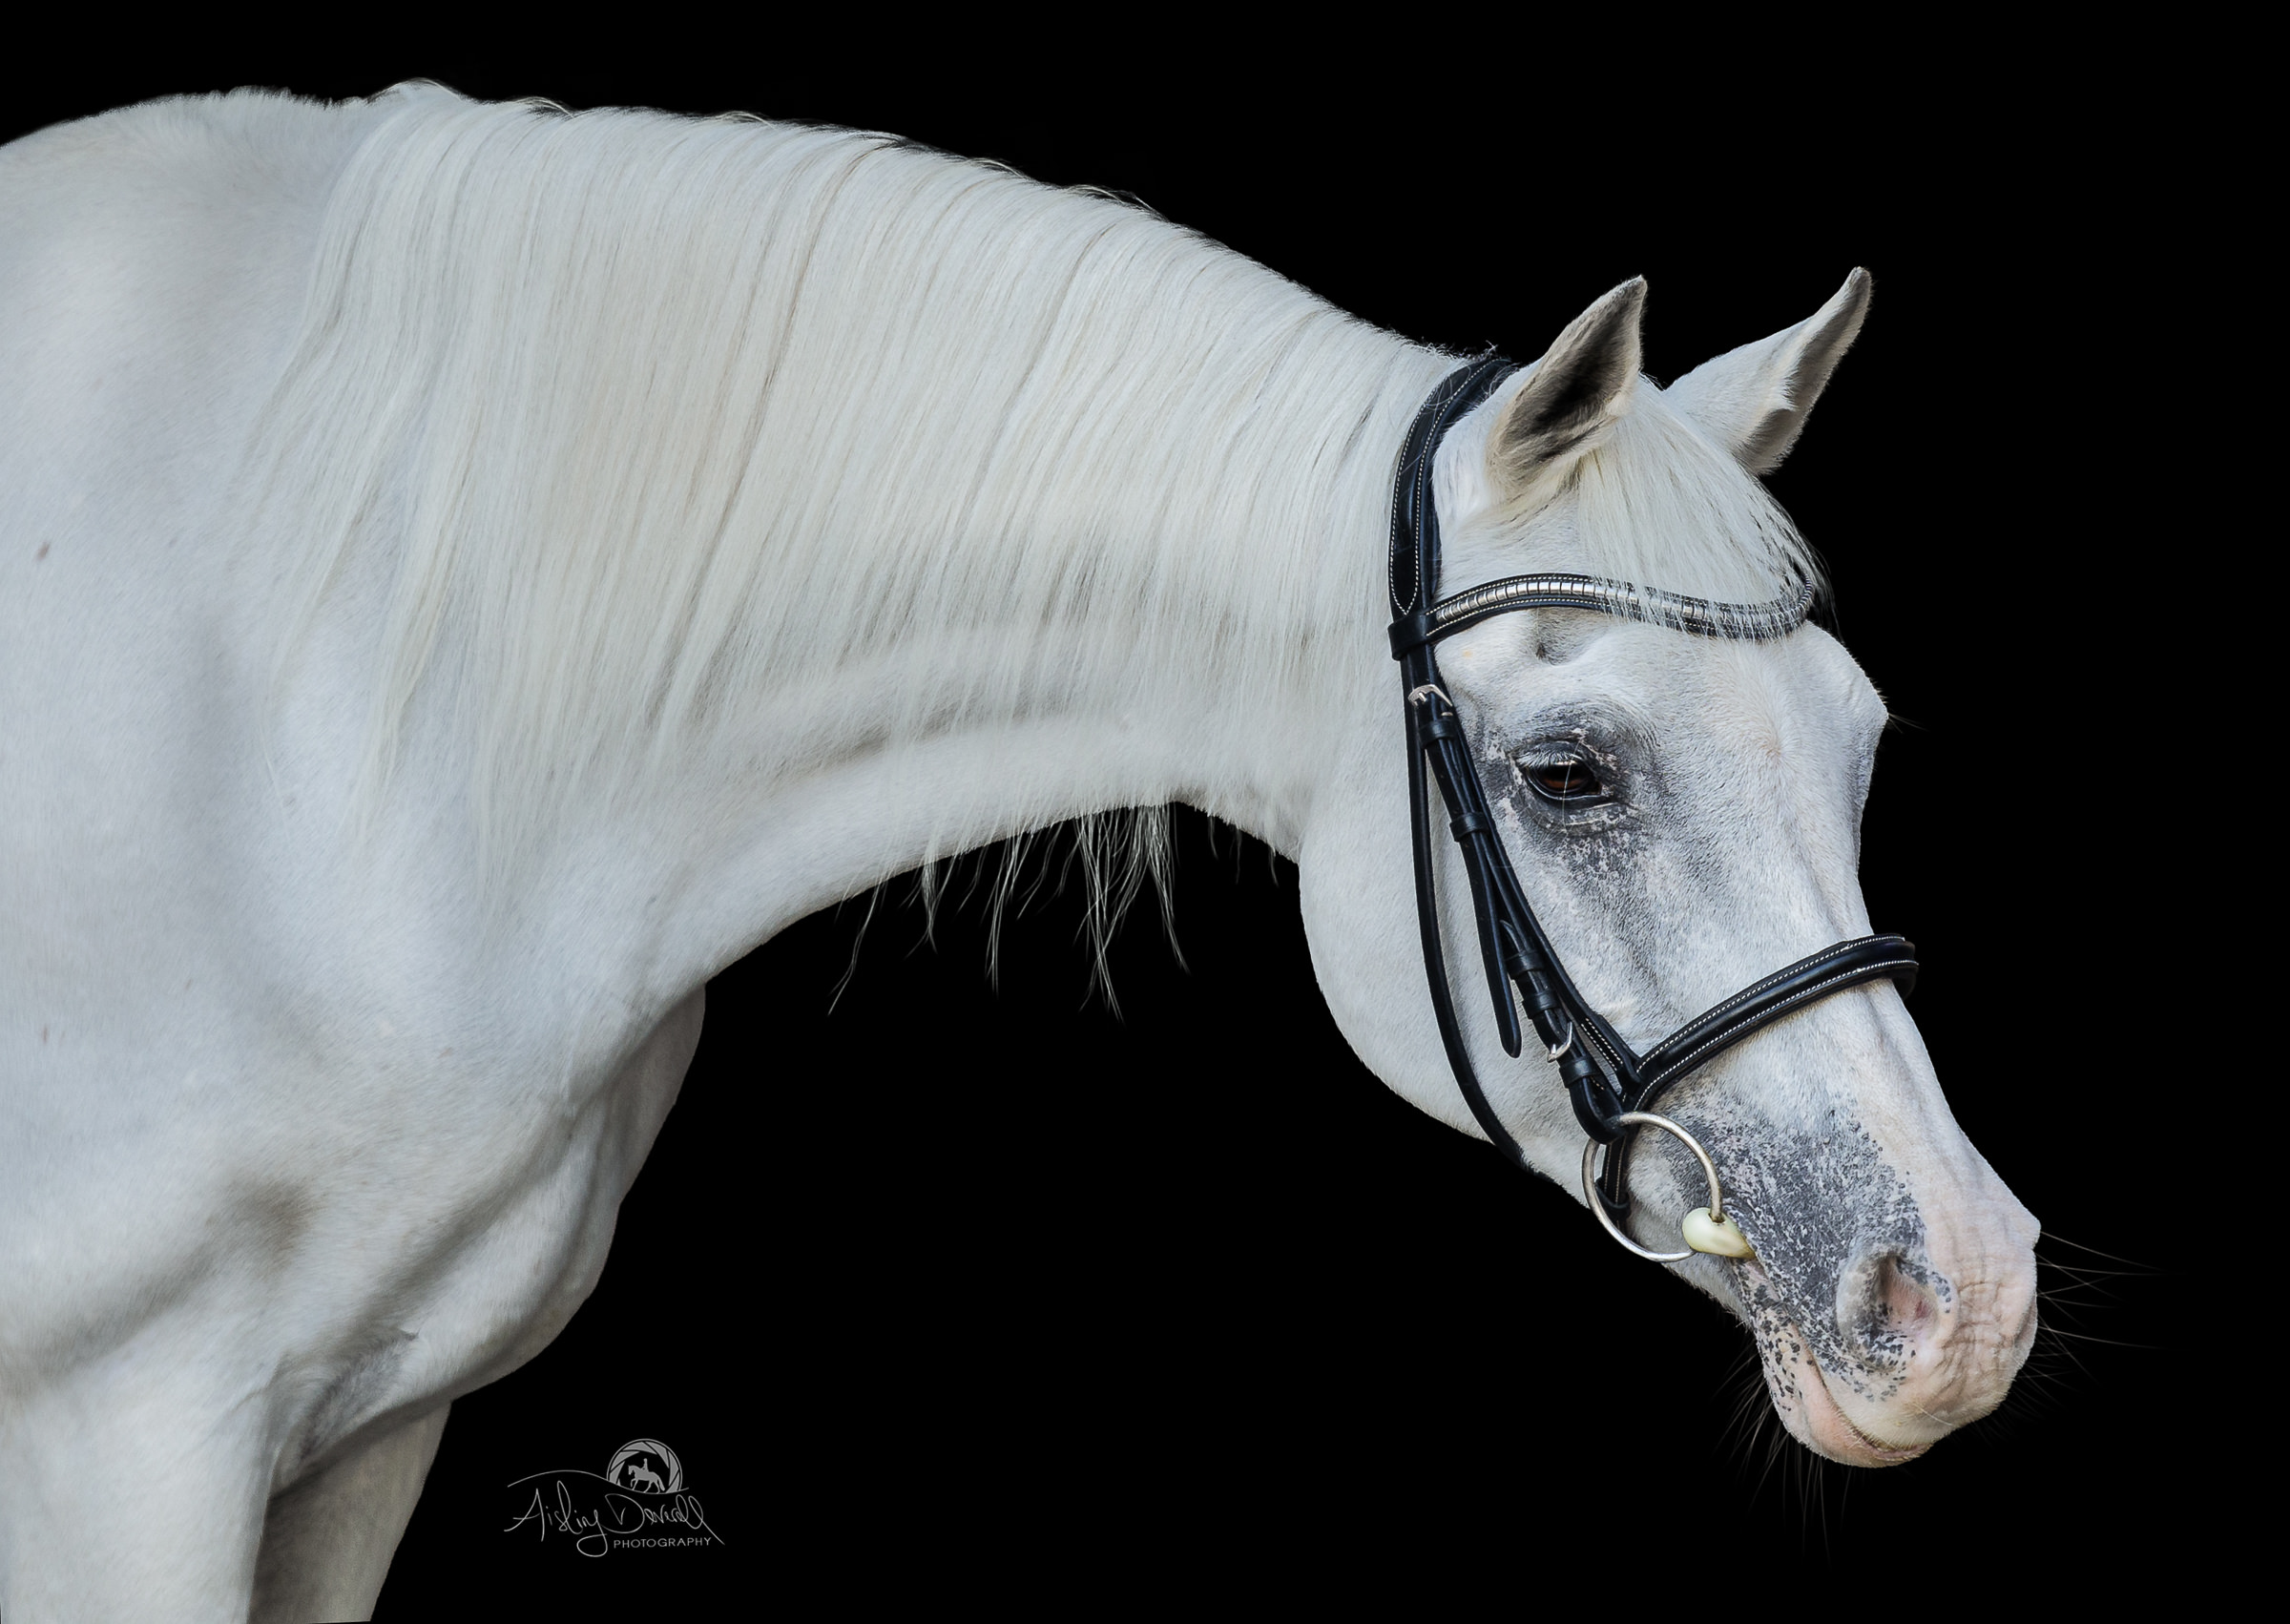 Arabian horse portrait on black background